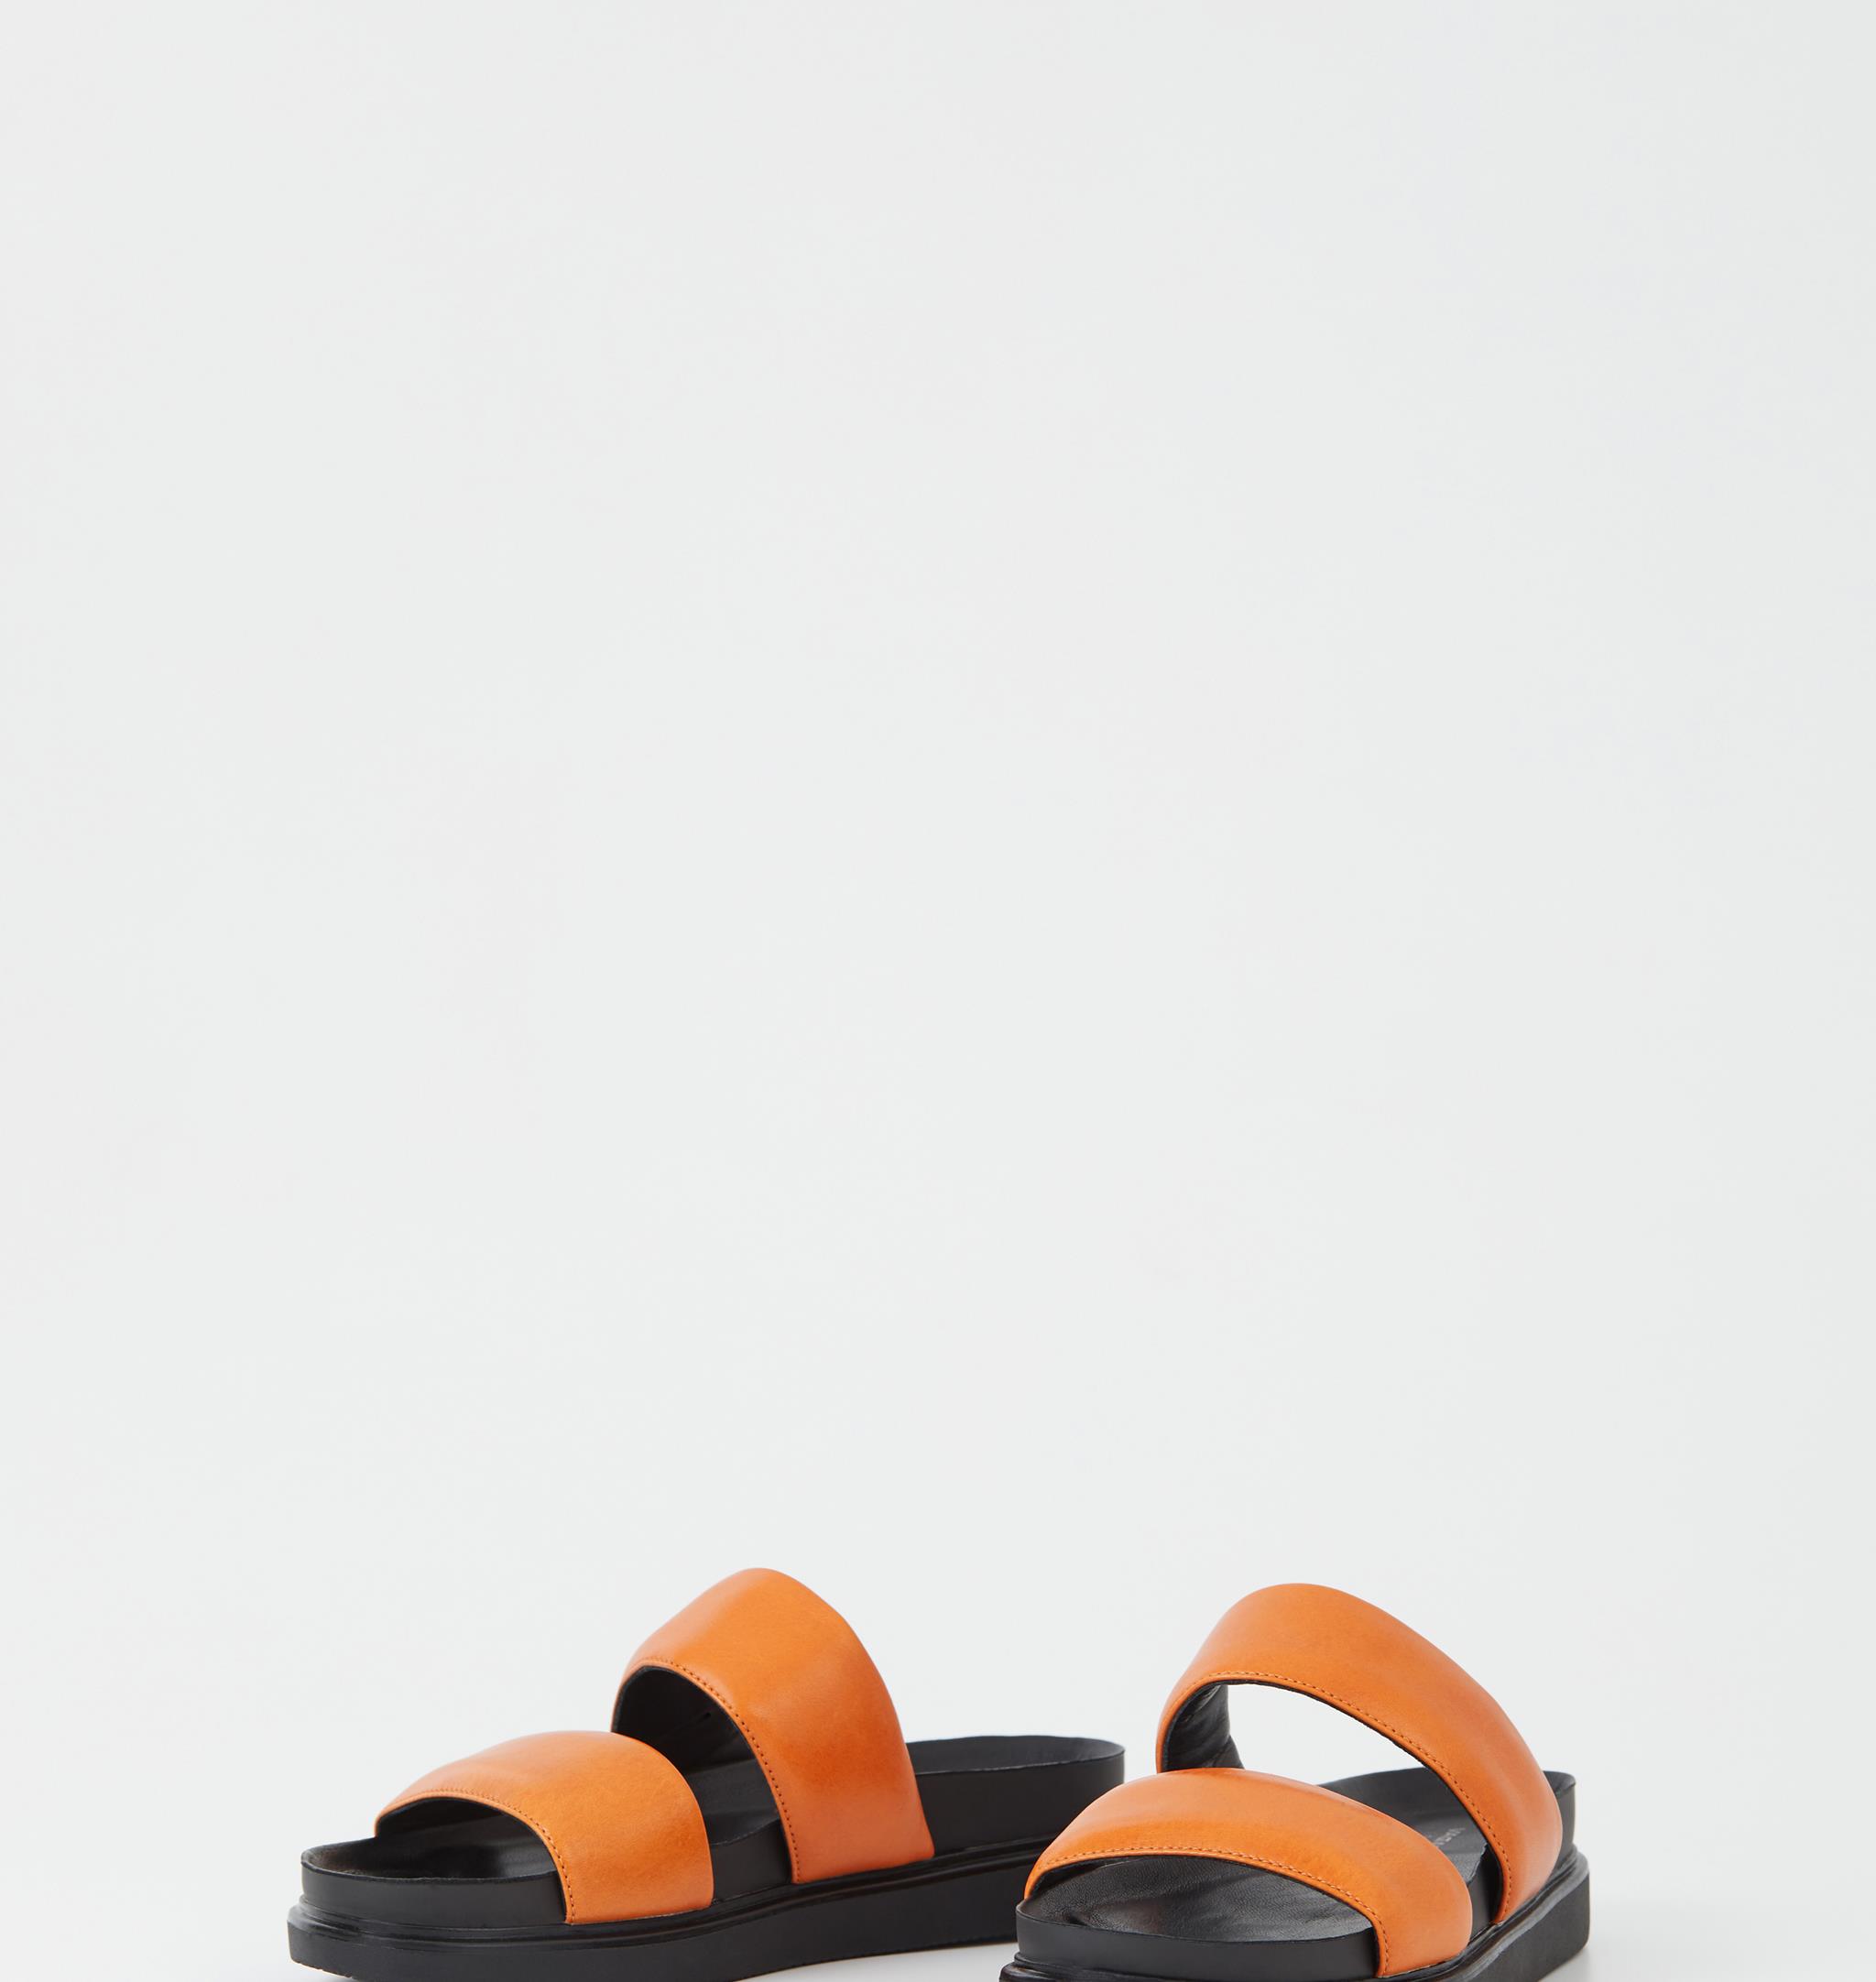 sfære Dam skjorte Erin - Orange Sandals Woman | Vagabond